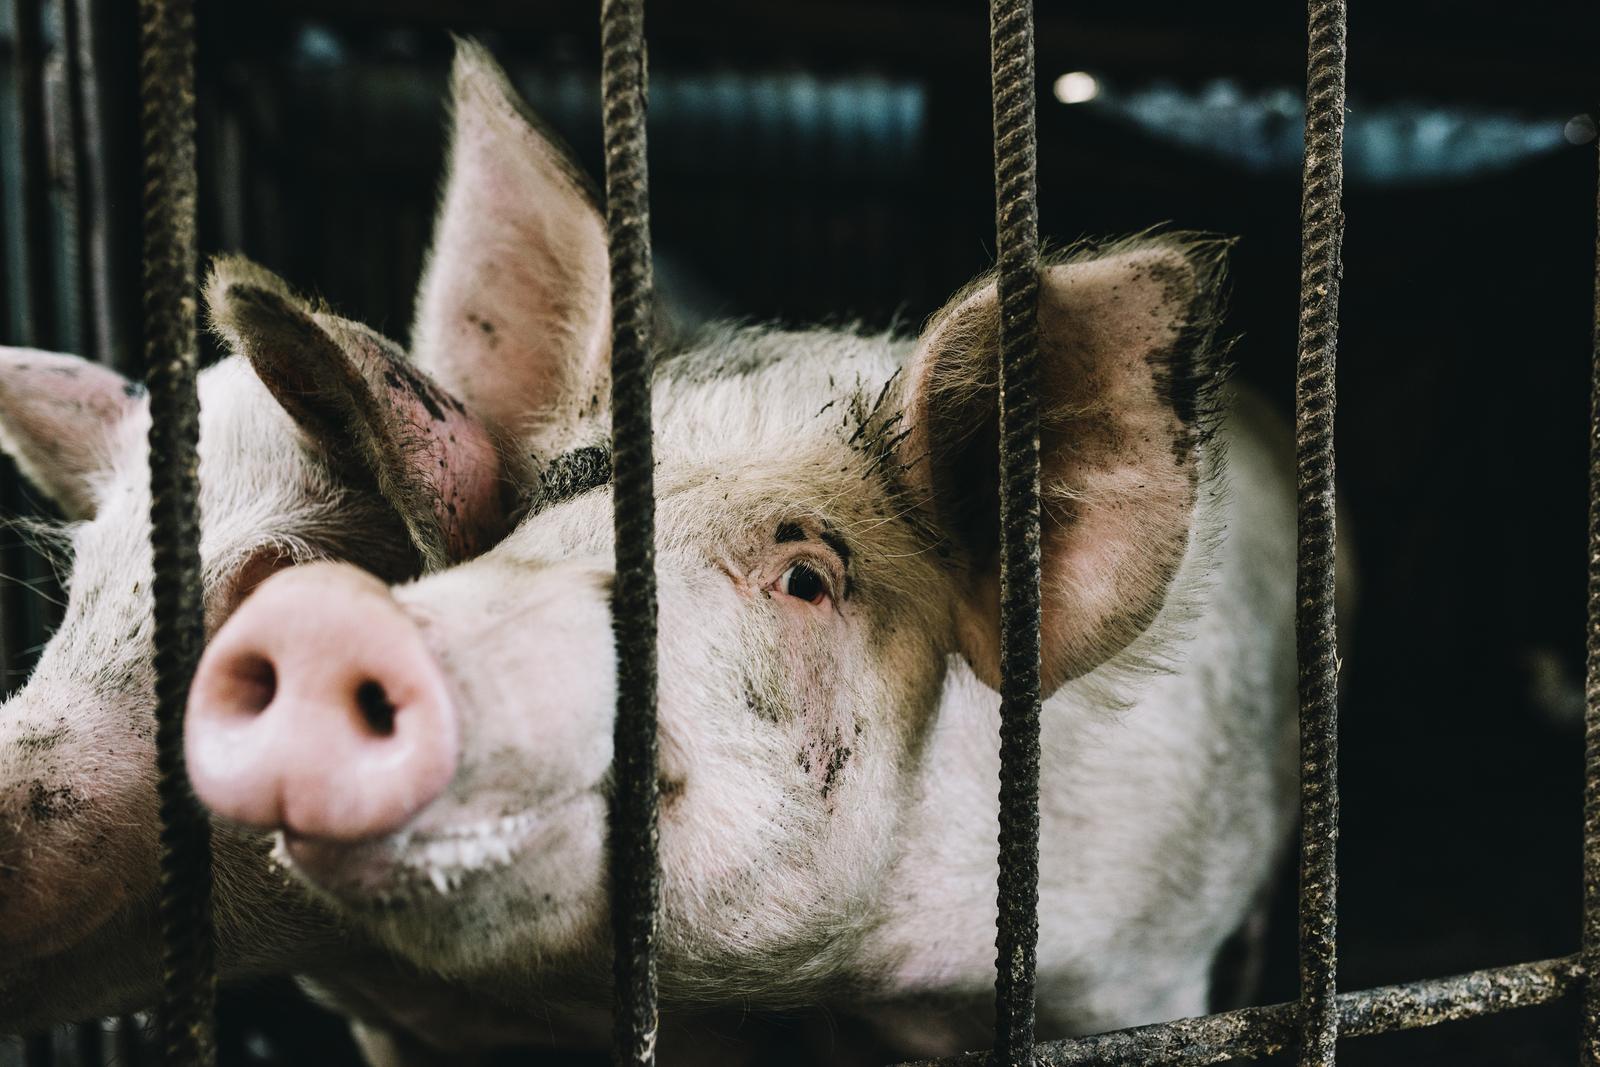 NURME SEAFARM AS - Raising of swine/pigs in Estonia